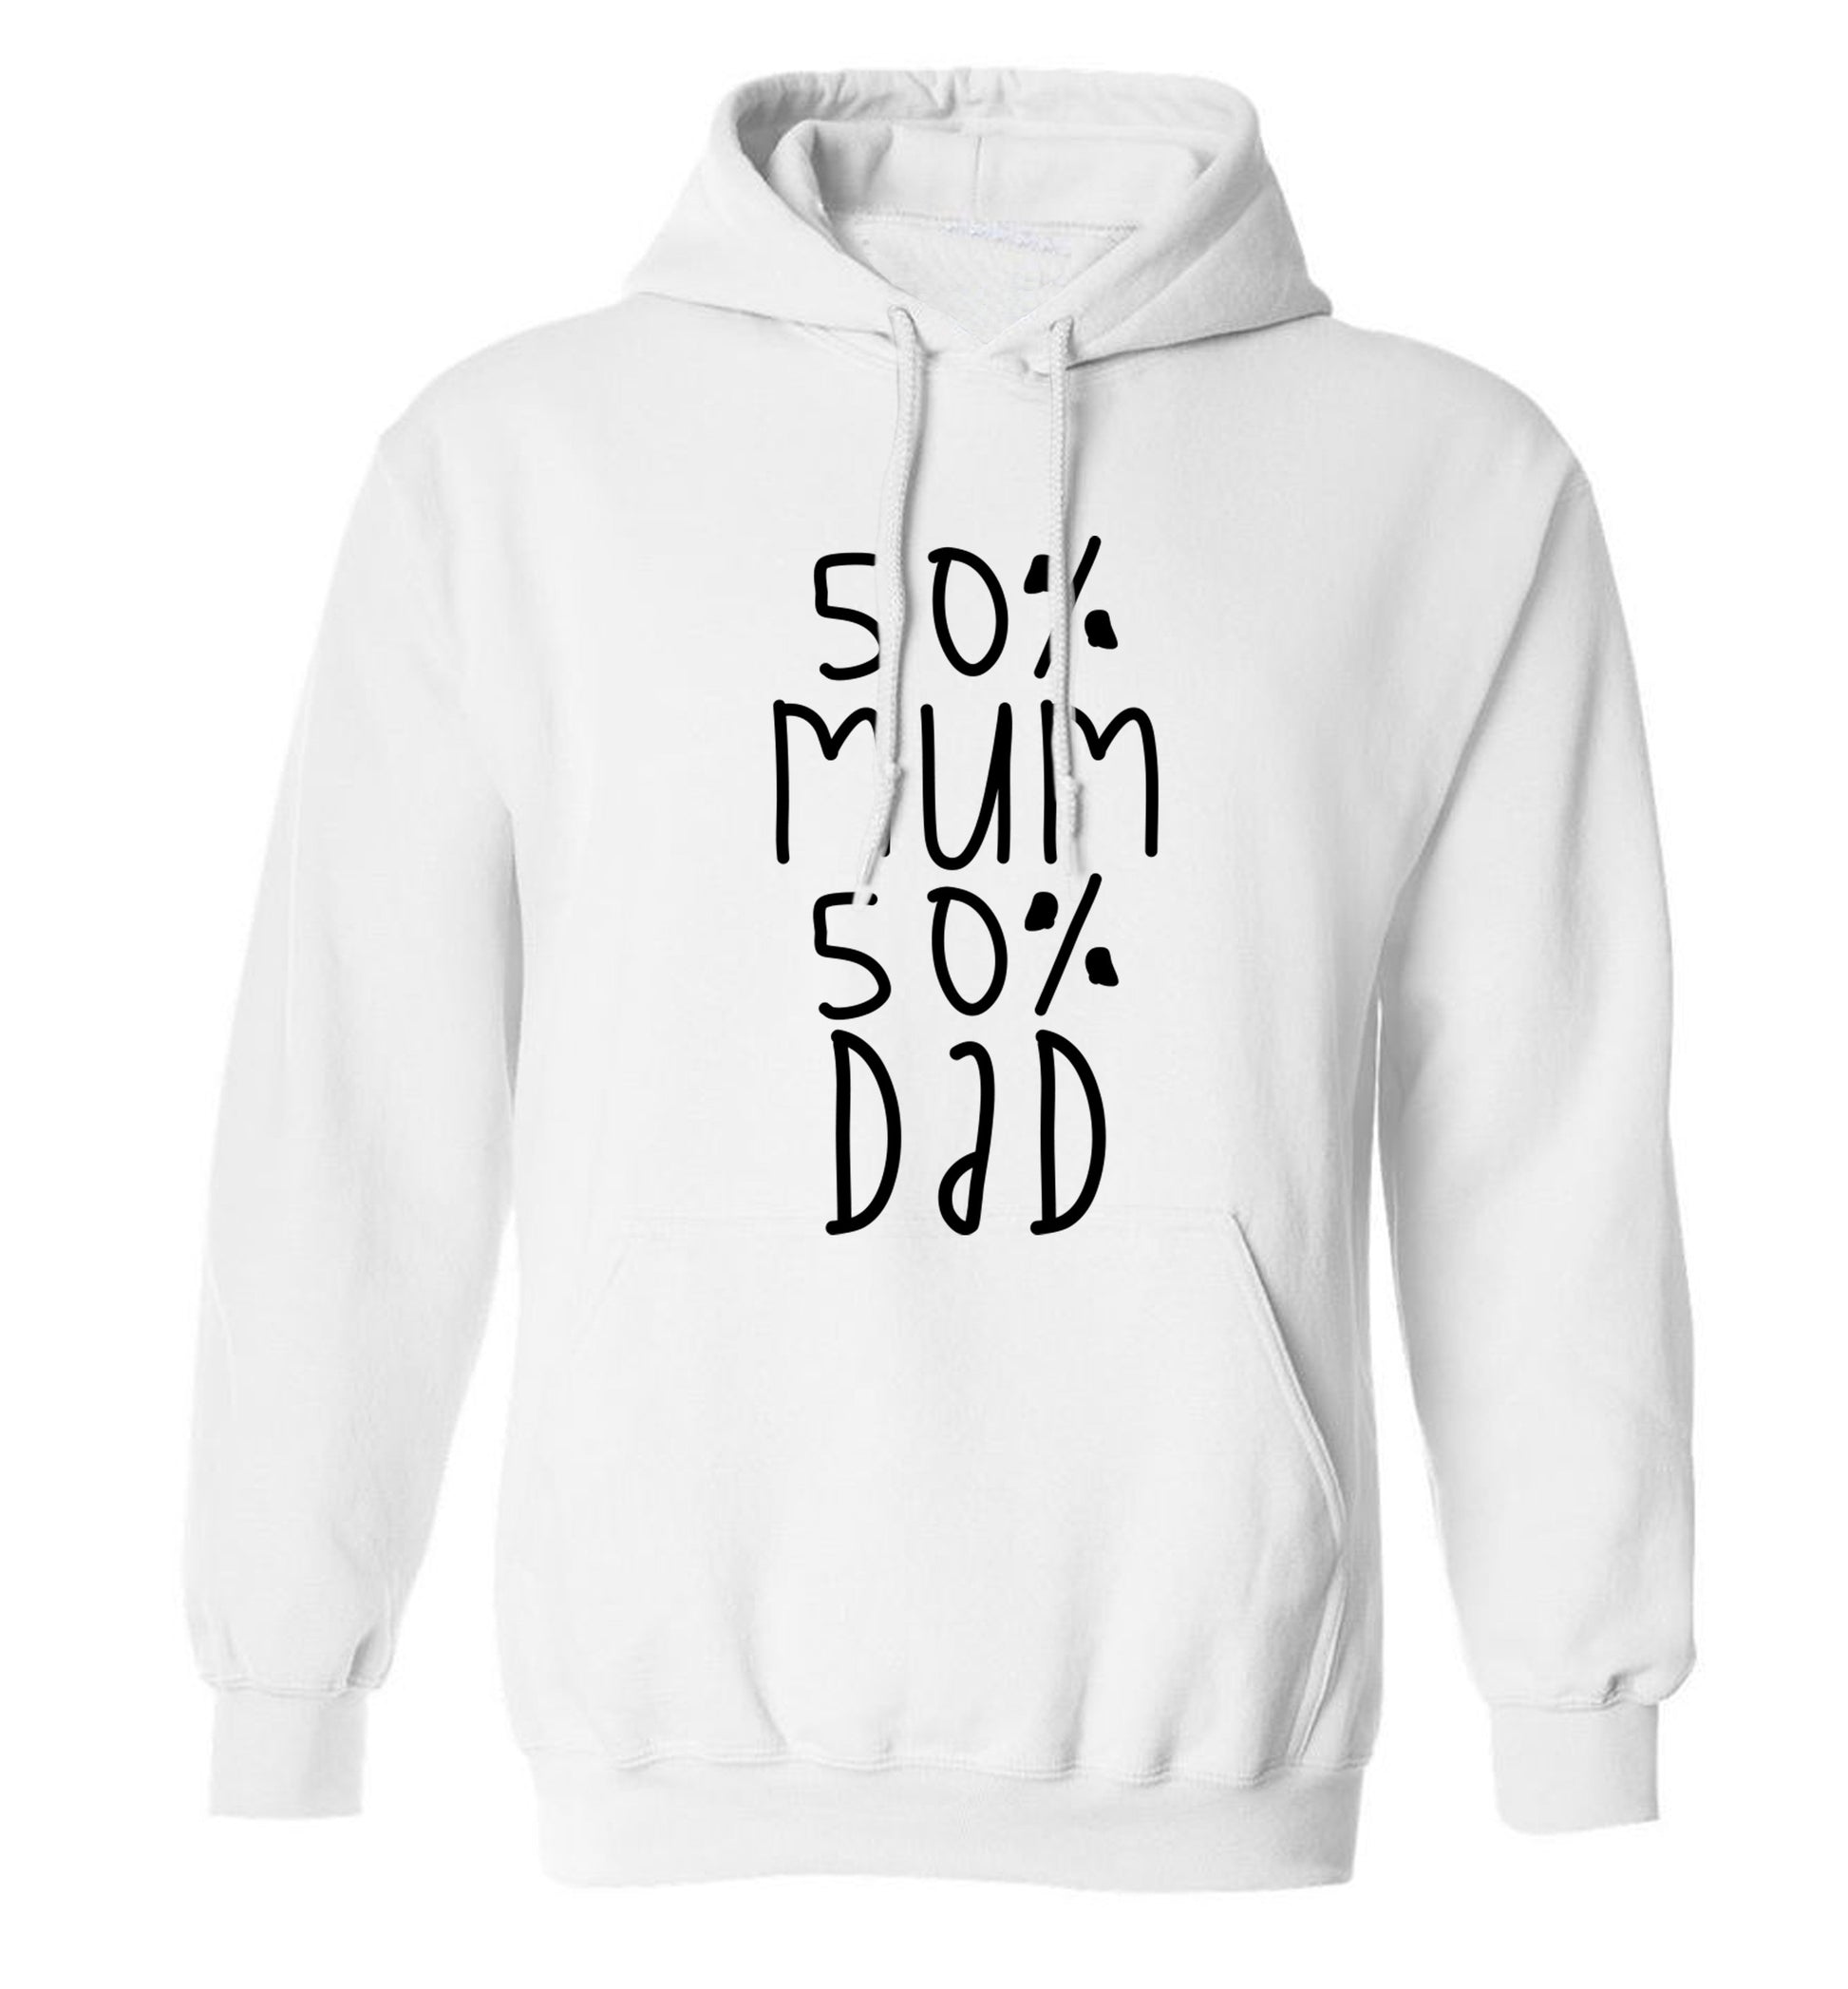 50% mum 50% dad adults unisex white hoodie 2XL